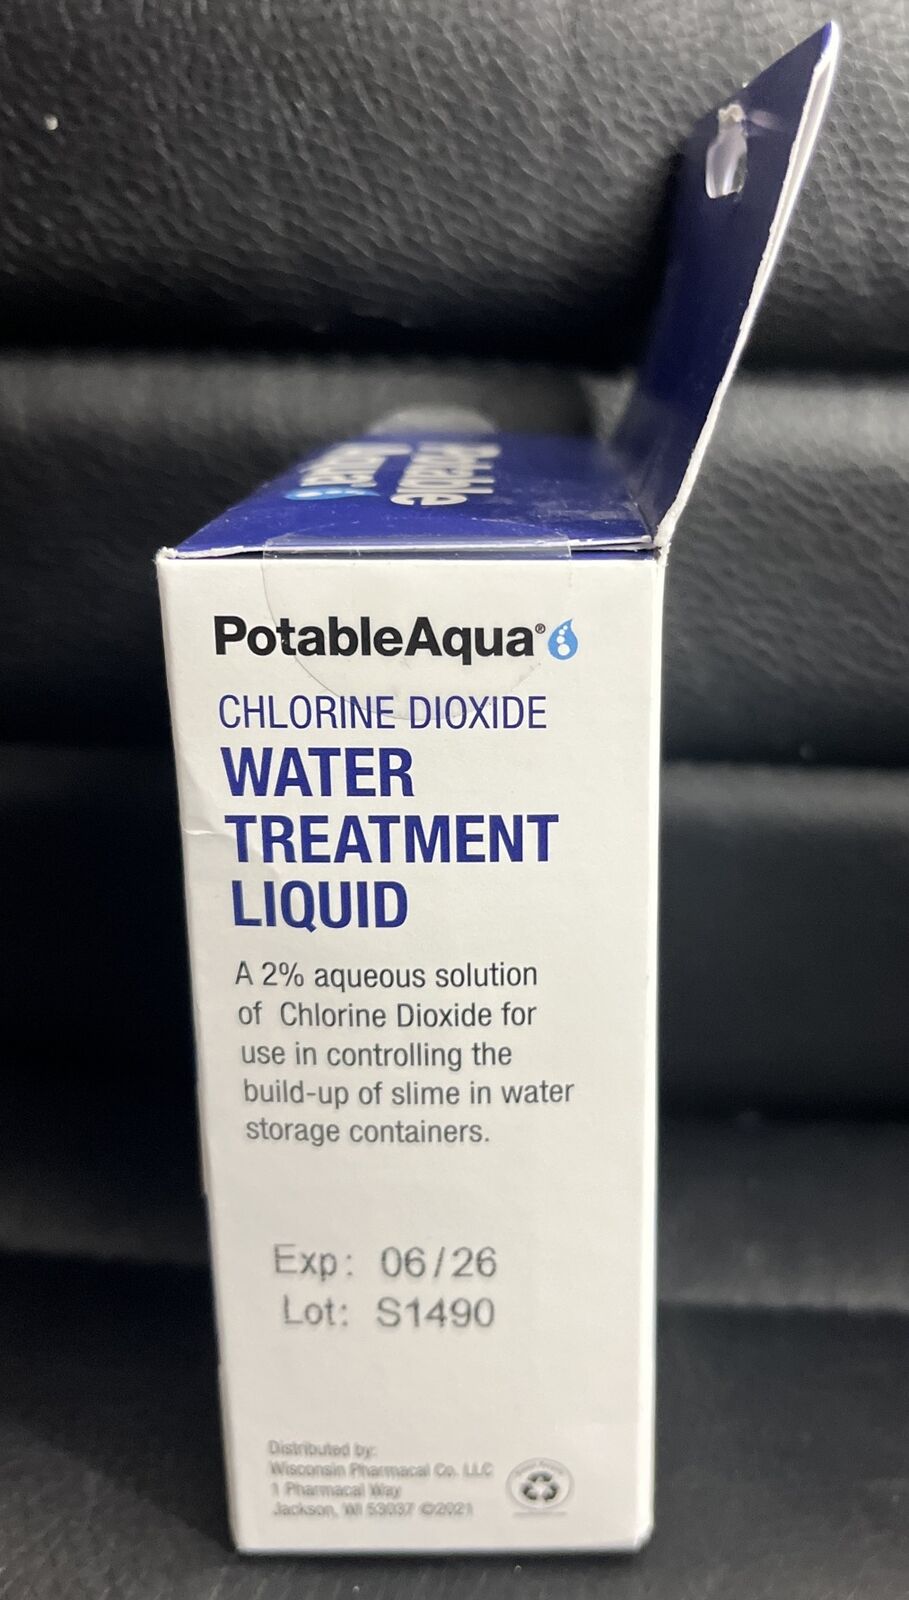 PotableAqua Chorine Dioxide Water Treatment Purification Liquid potableaqua - фотография #3